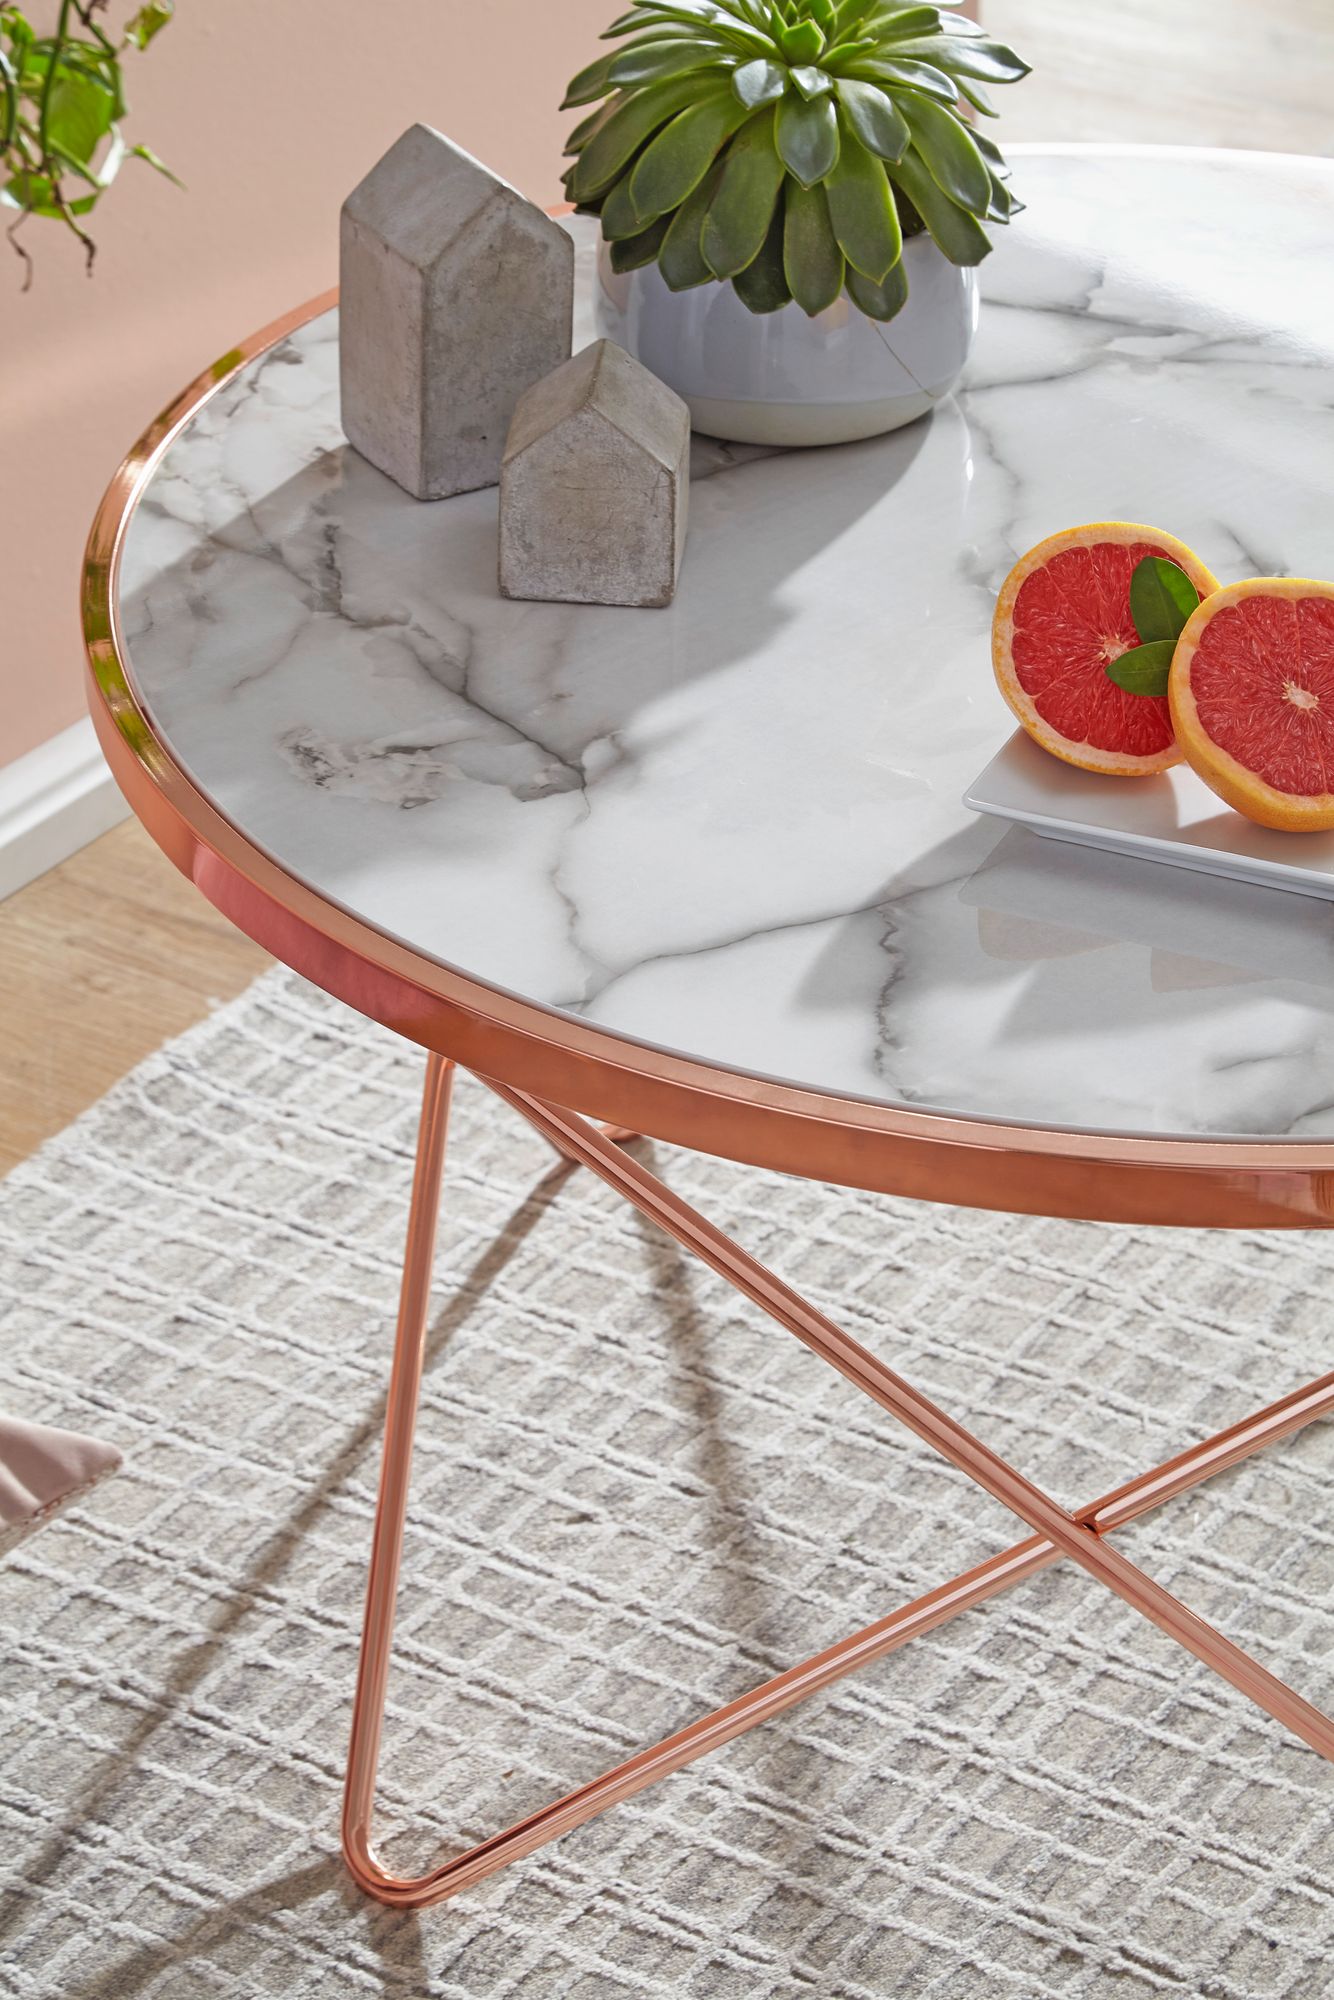 Design salontafel wit rond a 85 cm koperen metalen frame